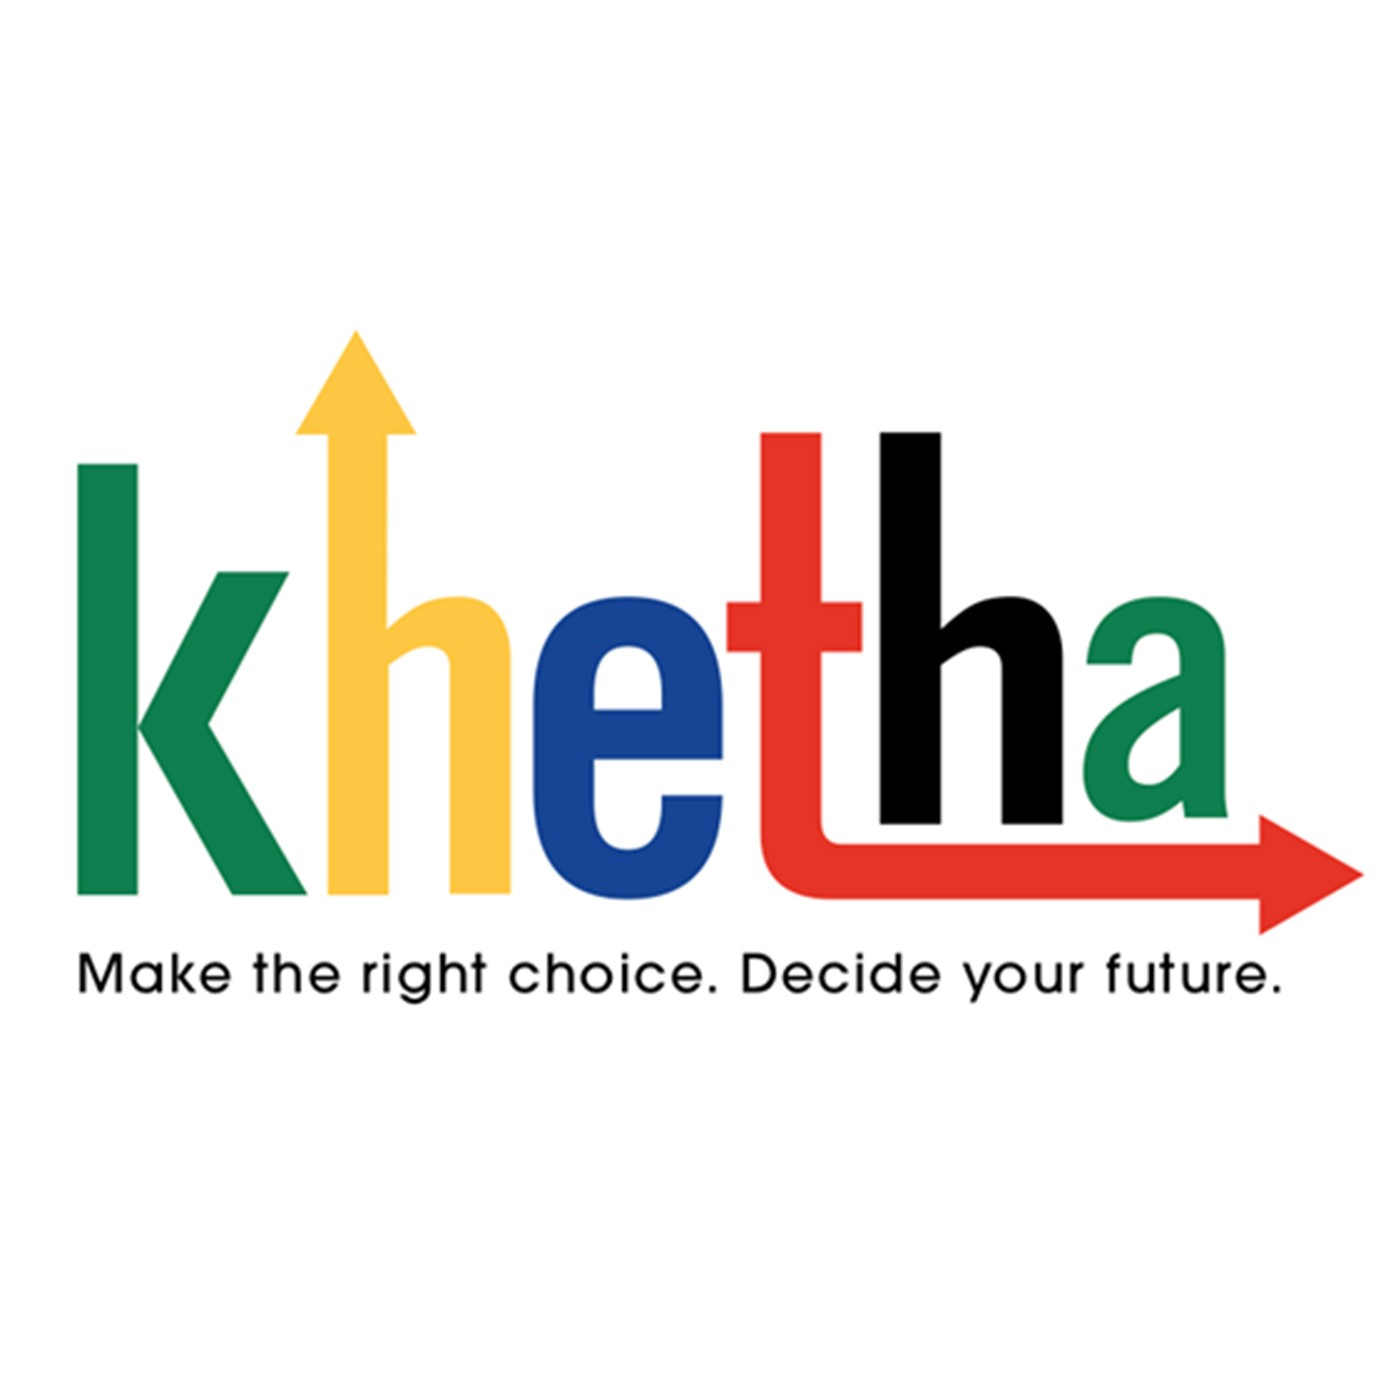 Khetha 27 February 2020